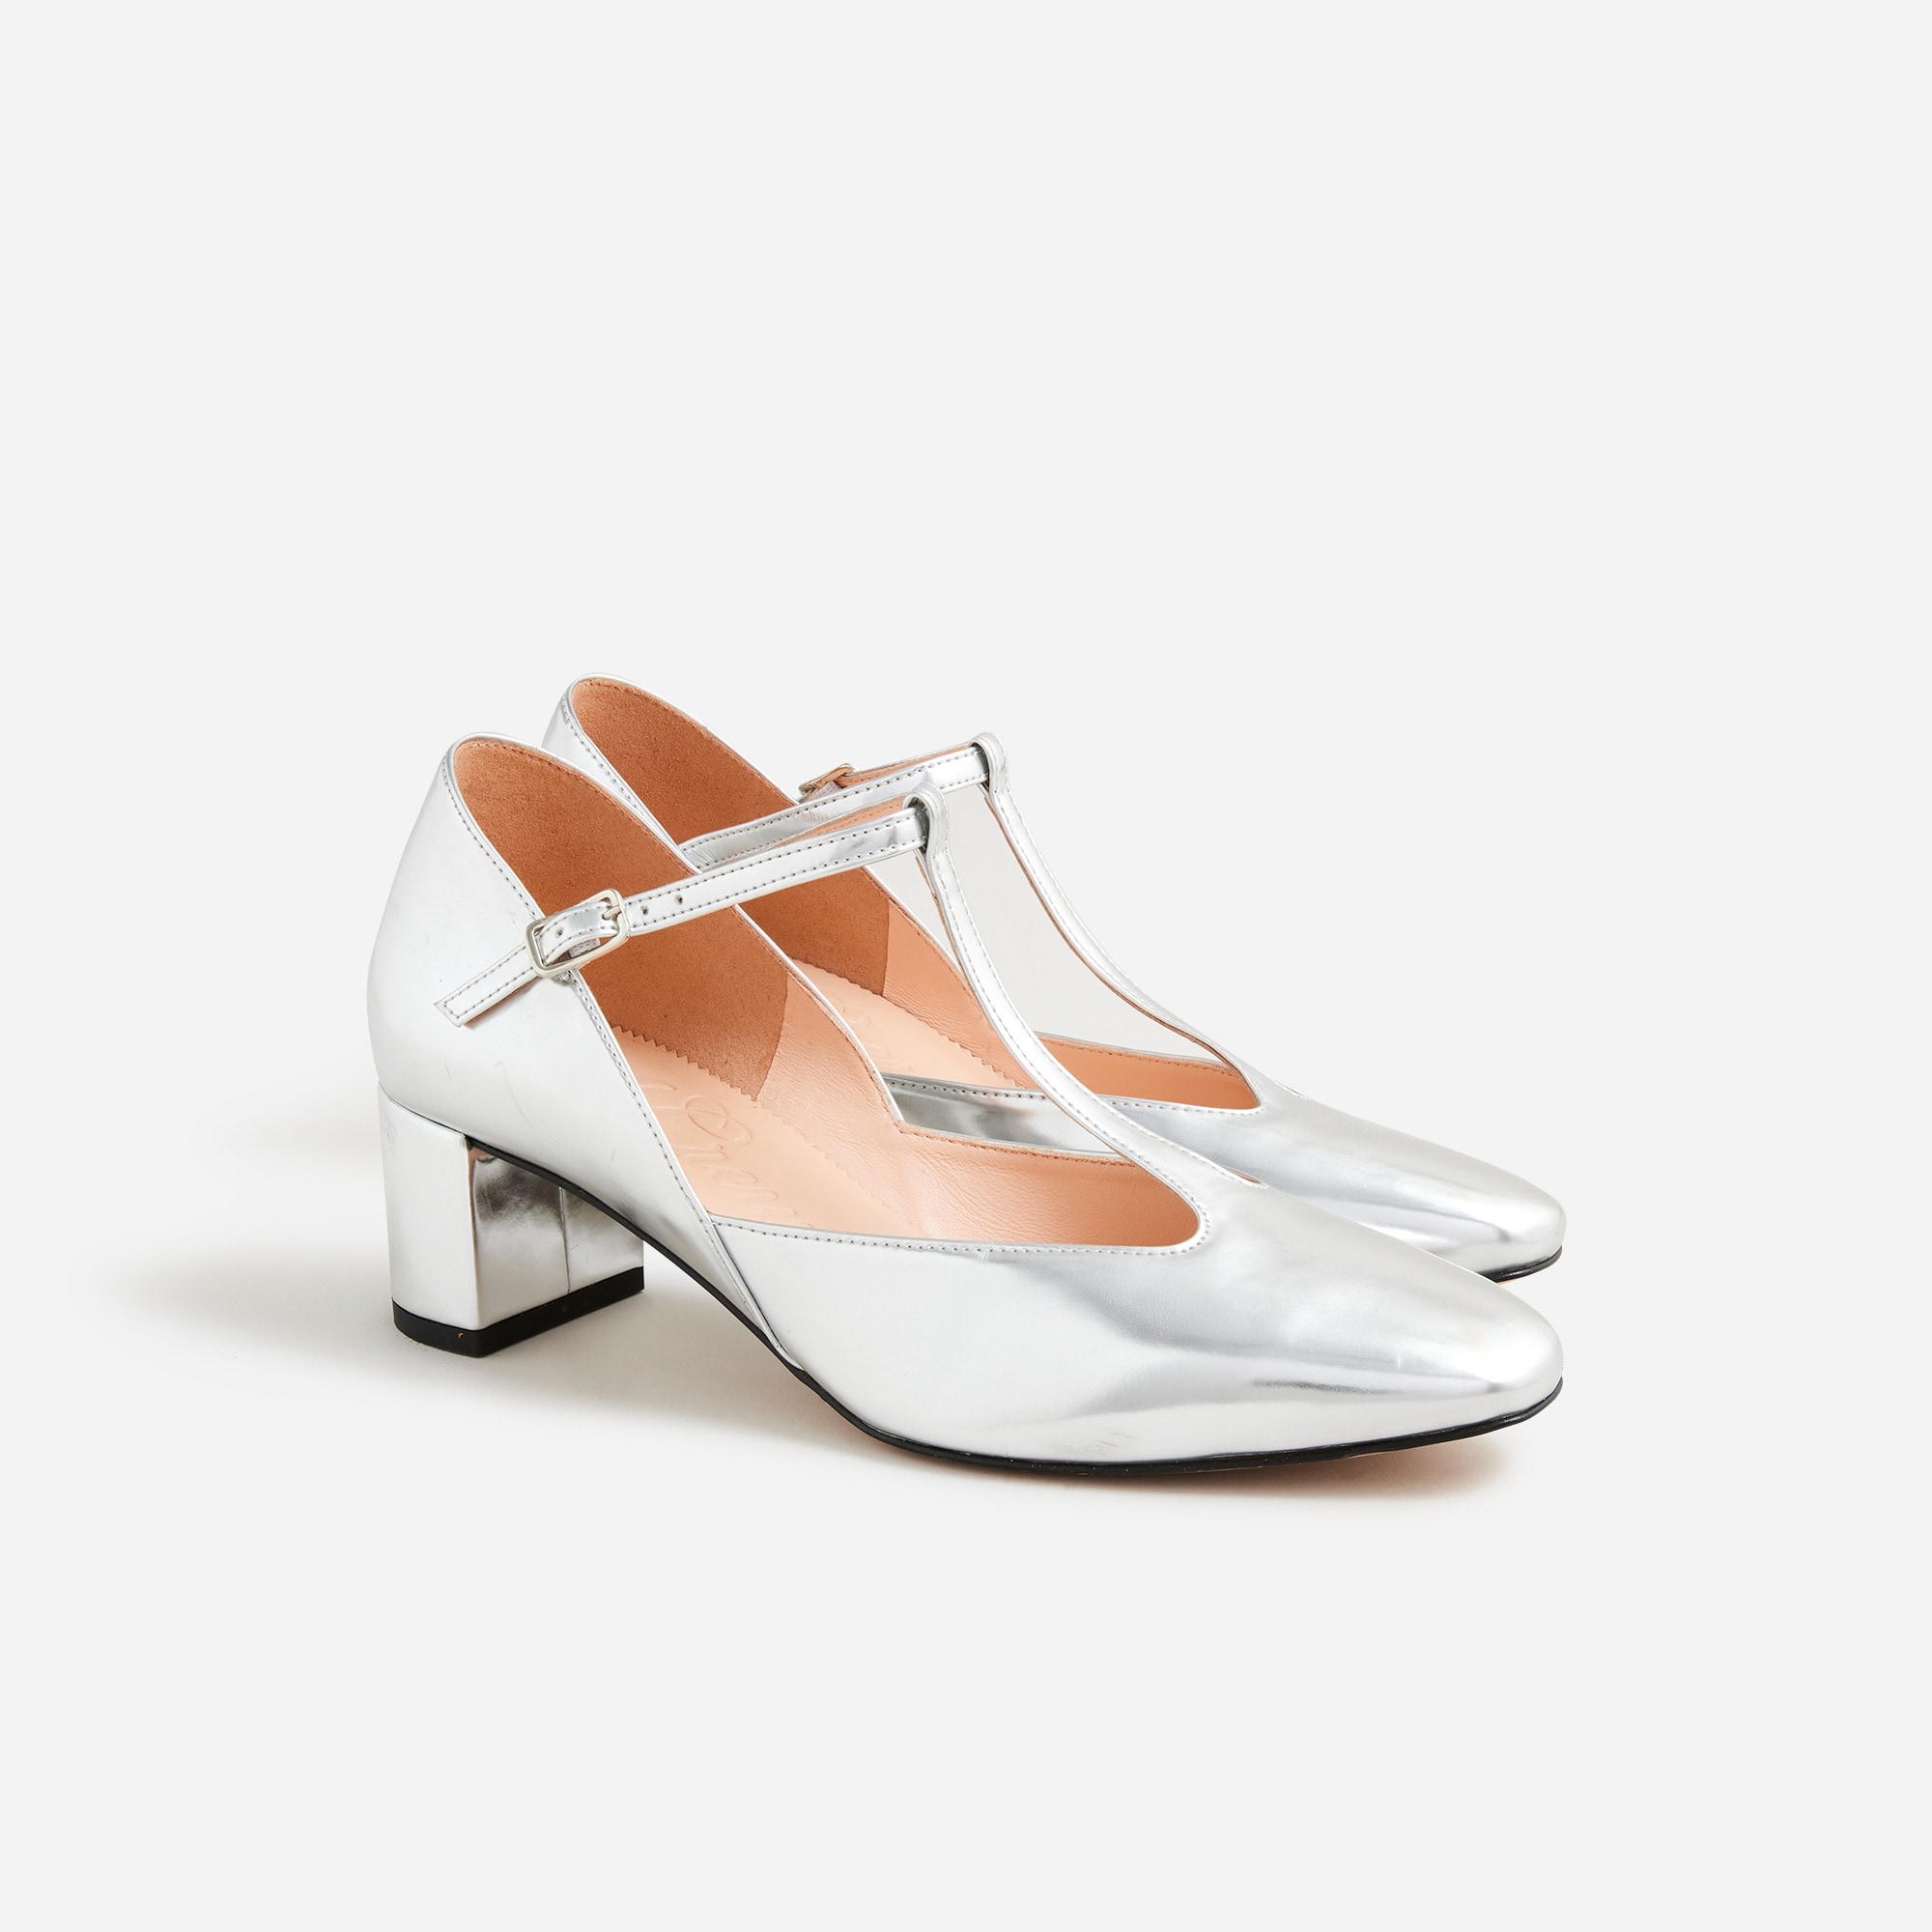  Millie T-strap heels in metallic leather